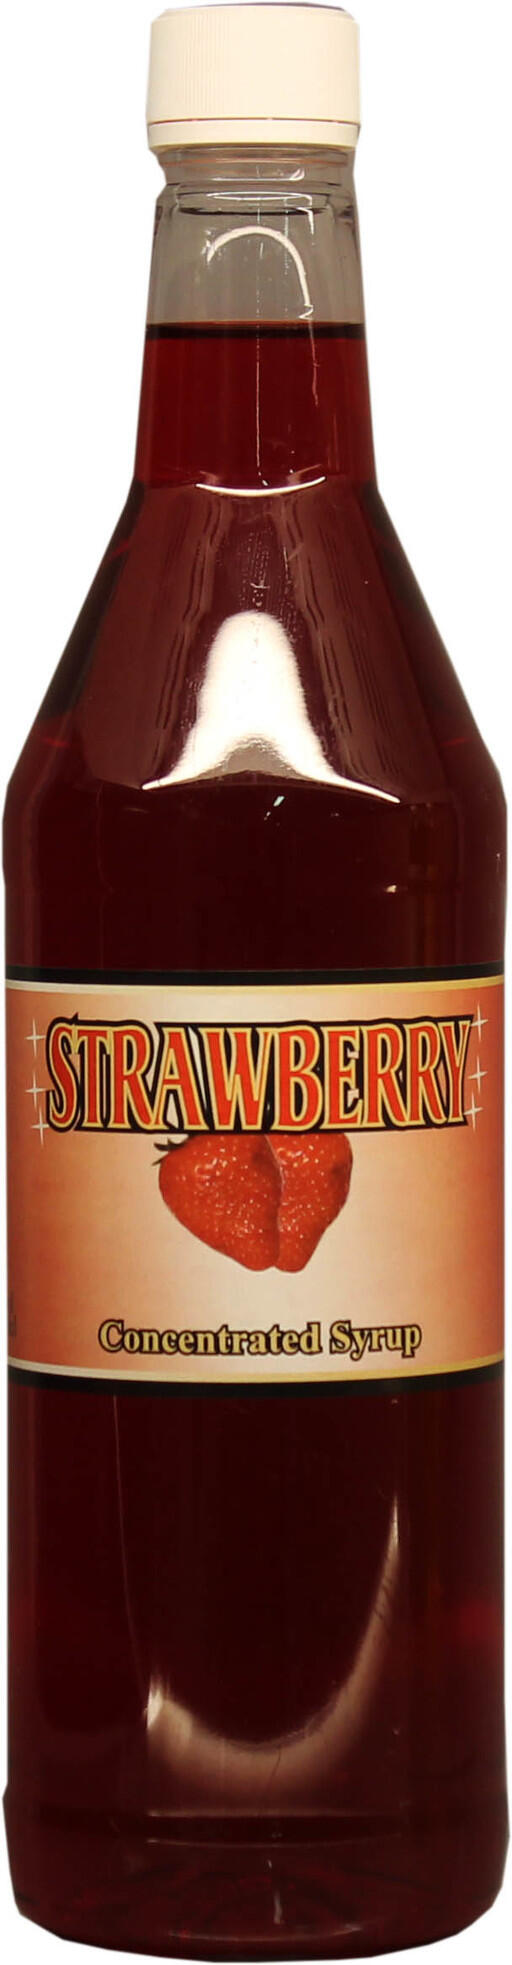 Jordgubbssirap (strawberry syrup).